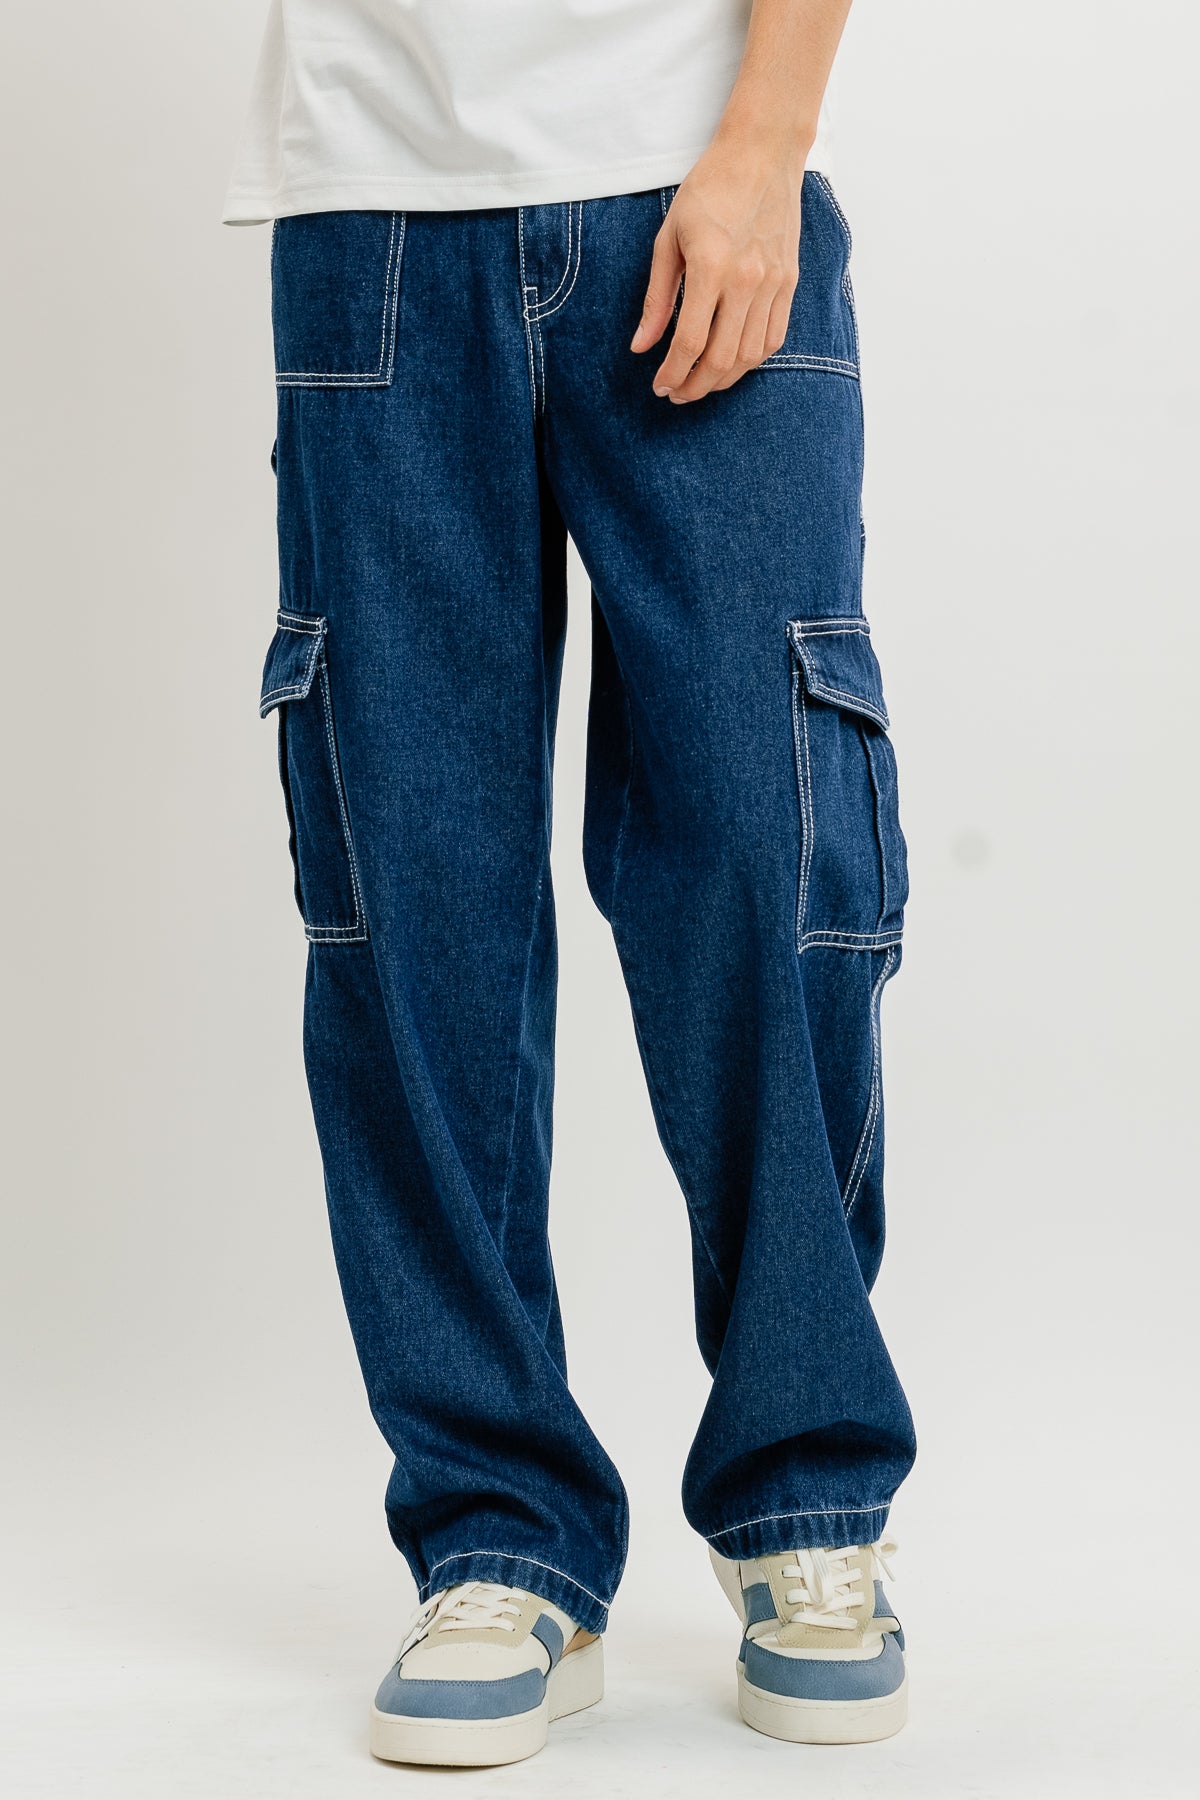 Buy Nuon Dark Blue Denim Straight Jeans from Westside